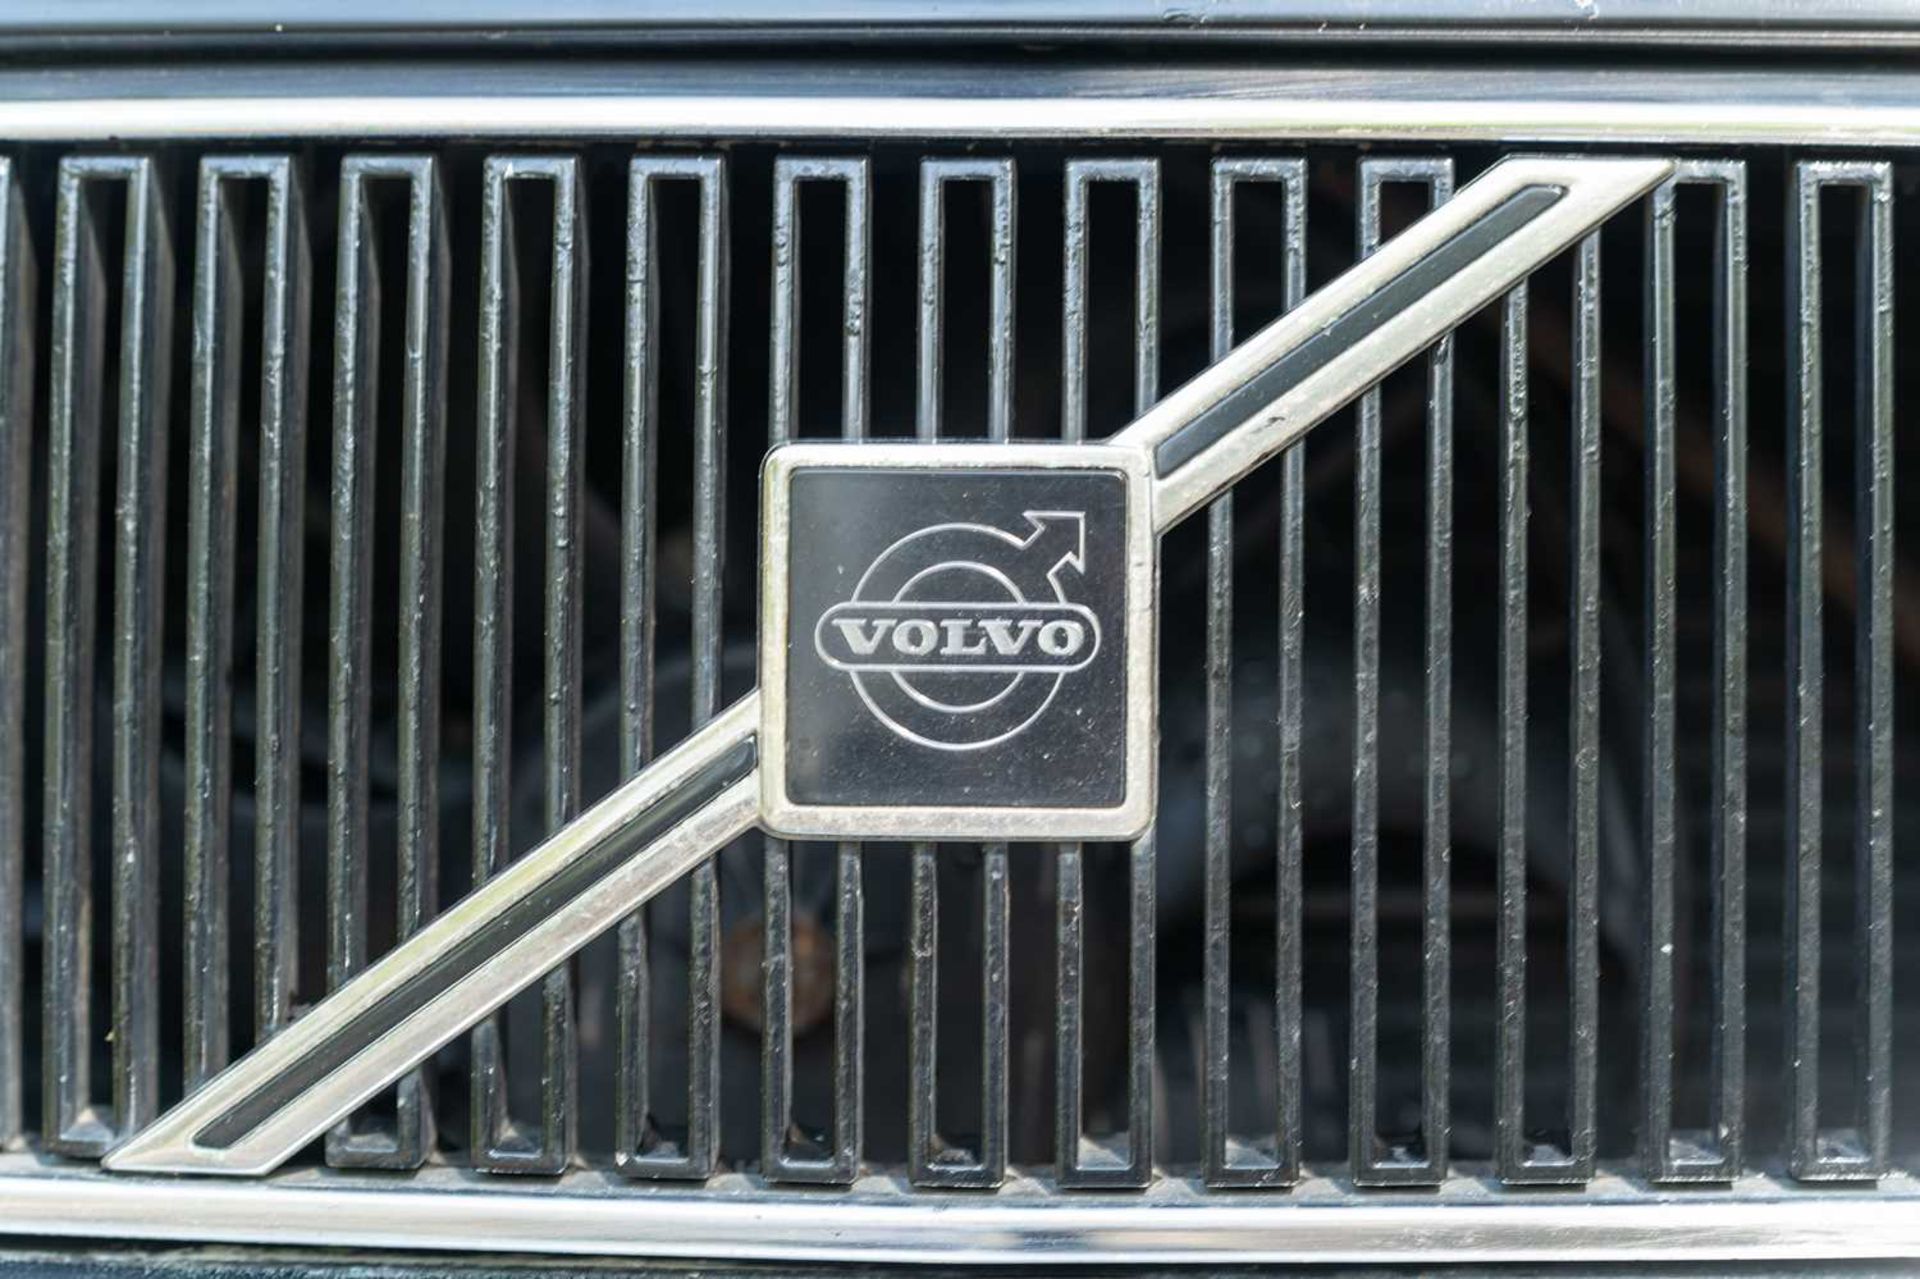 1987 Volvo 760 Turbo Intercooler Saloon Rare factory Manual *** NO RESERVE *** - Image 15 of 61